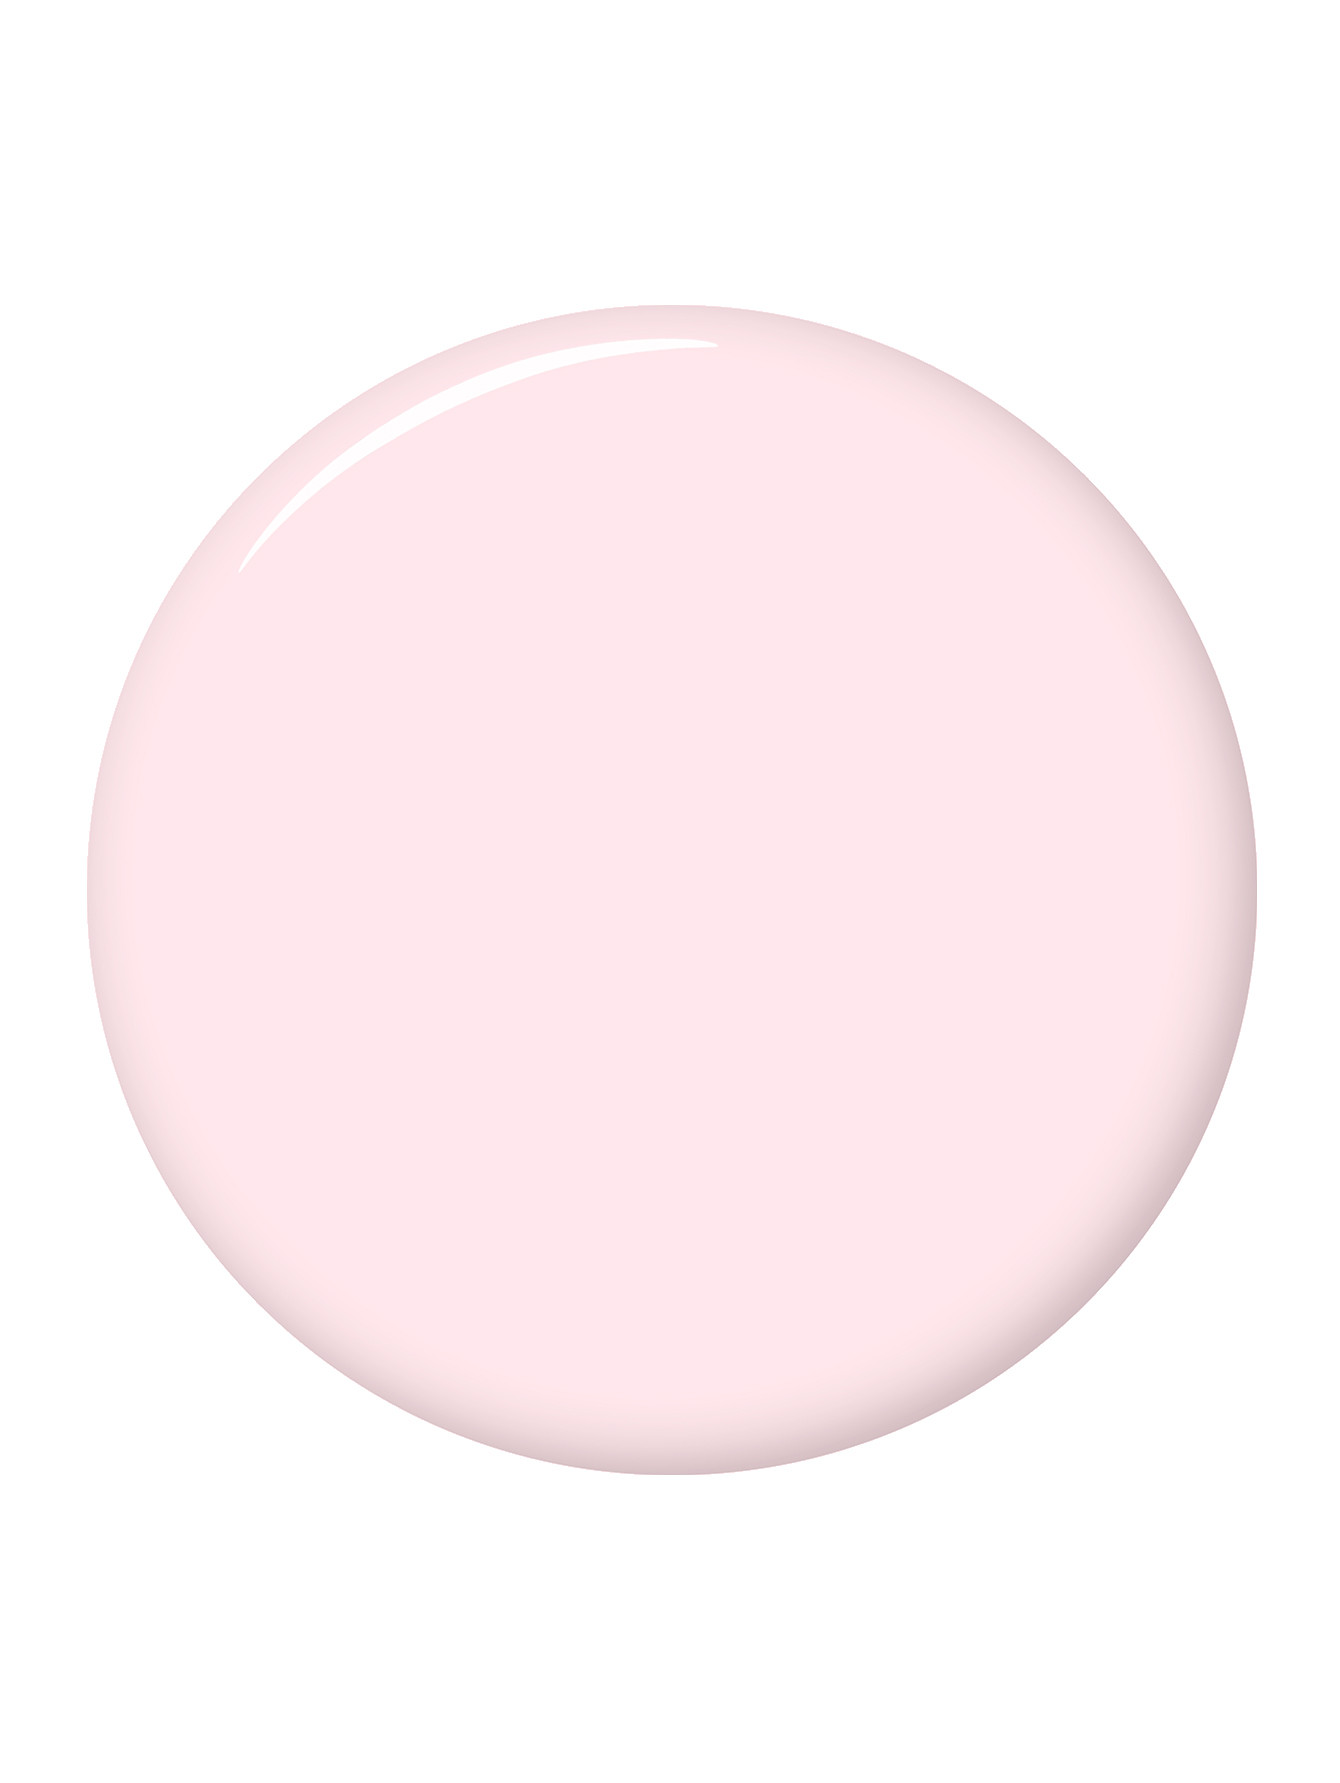  Лак Diana - French pink + bond-подготовка, Nail Care, 12+9ml - Обтравка1